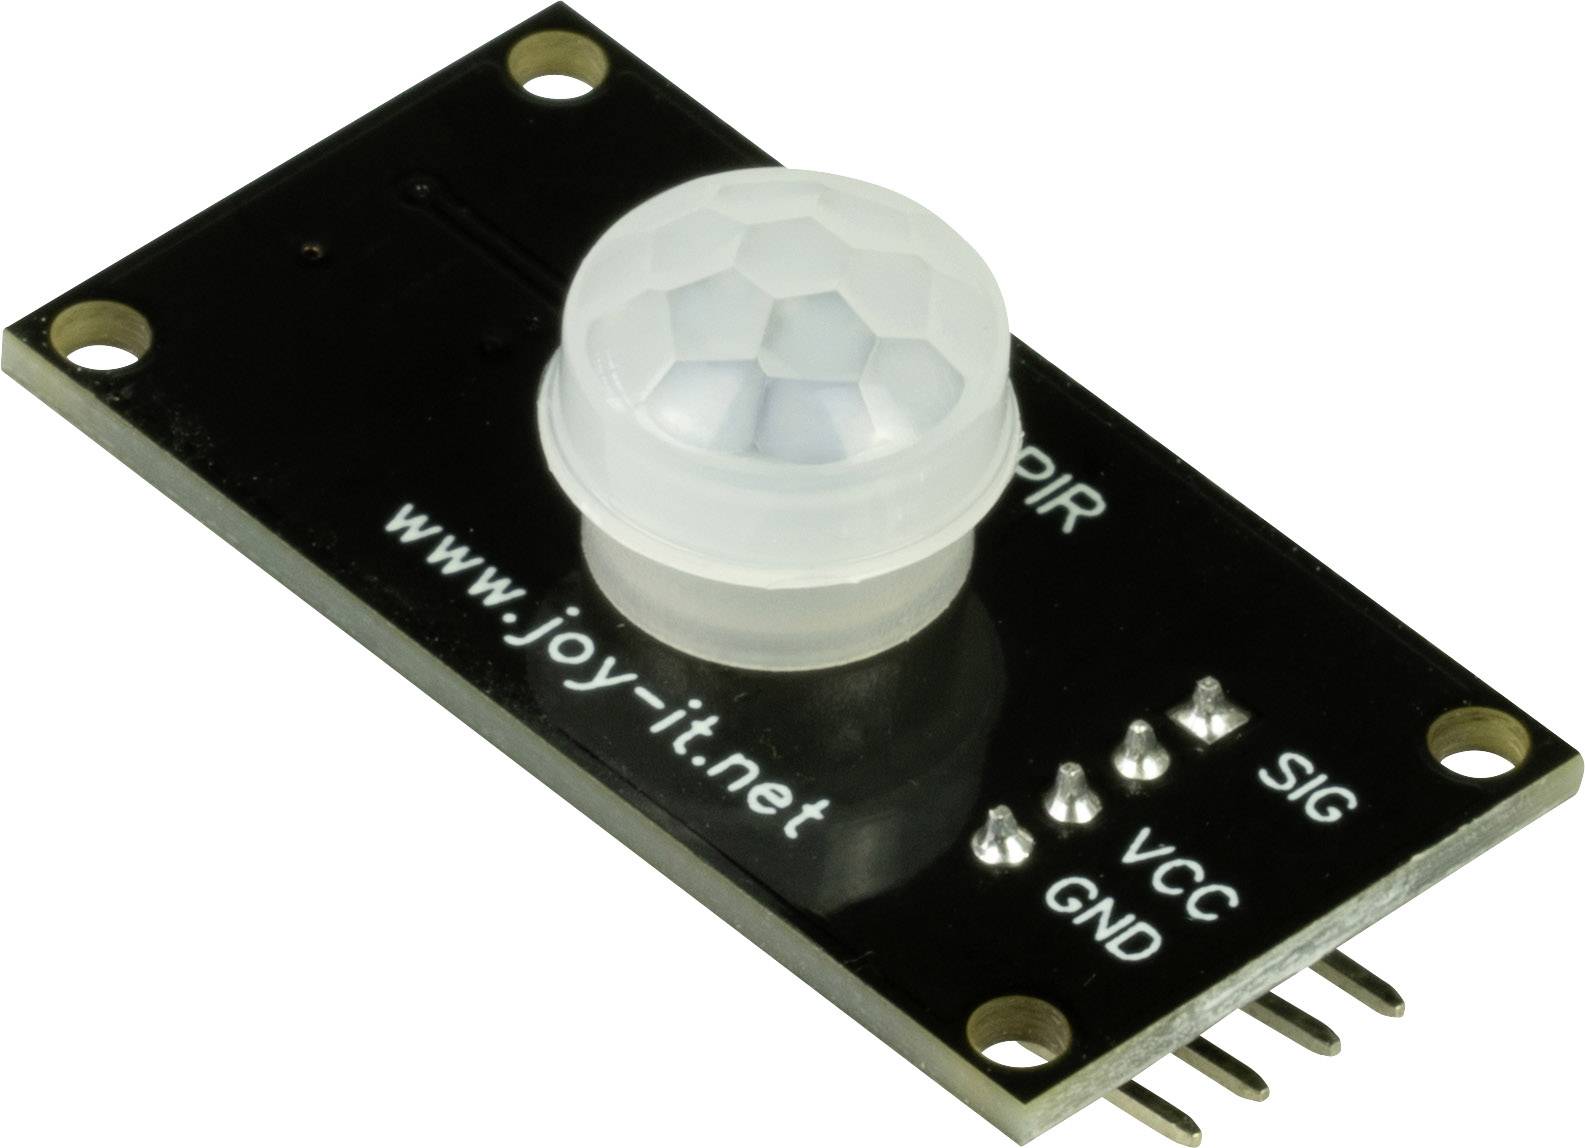 JOY-IT SBC-PIR Bewegungs-Sensor 1 St. Passend für: Arduino, Raspberry Pi, micro:bit